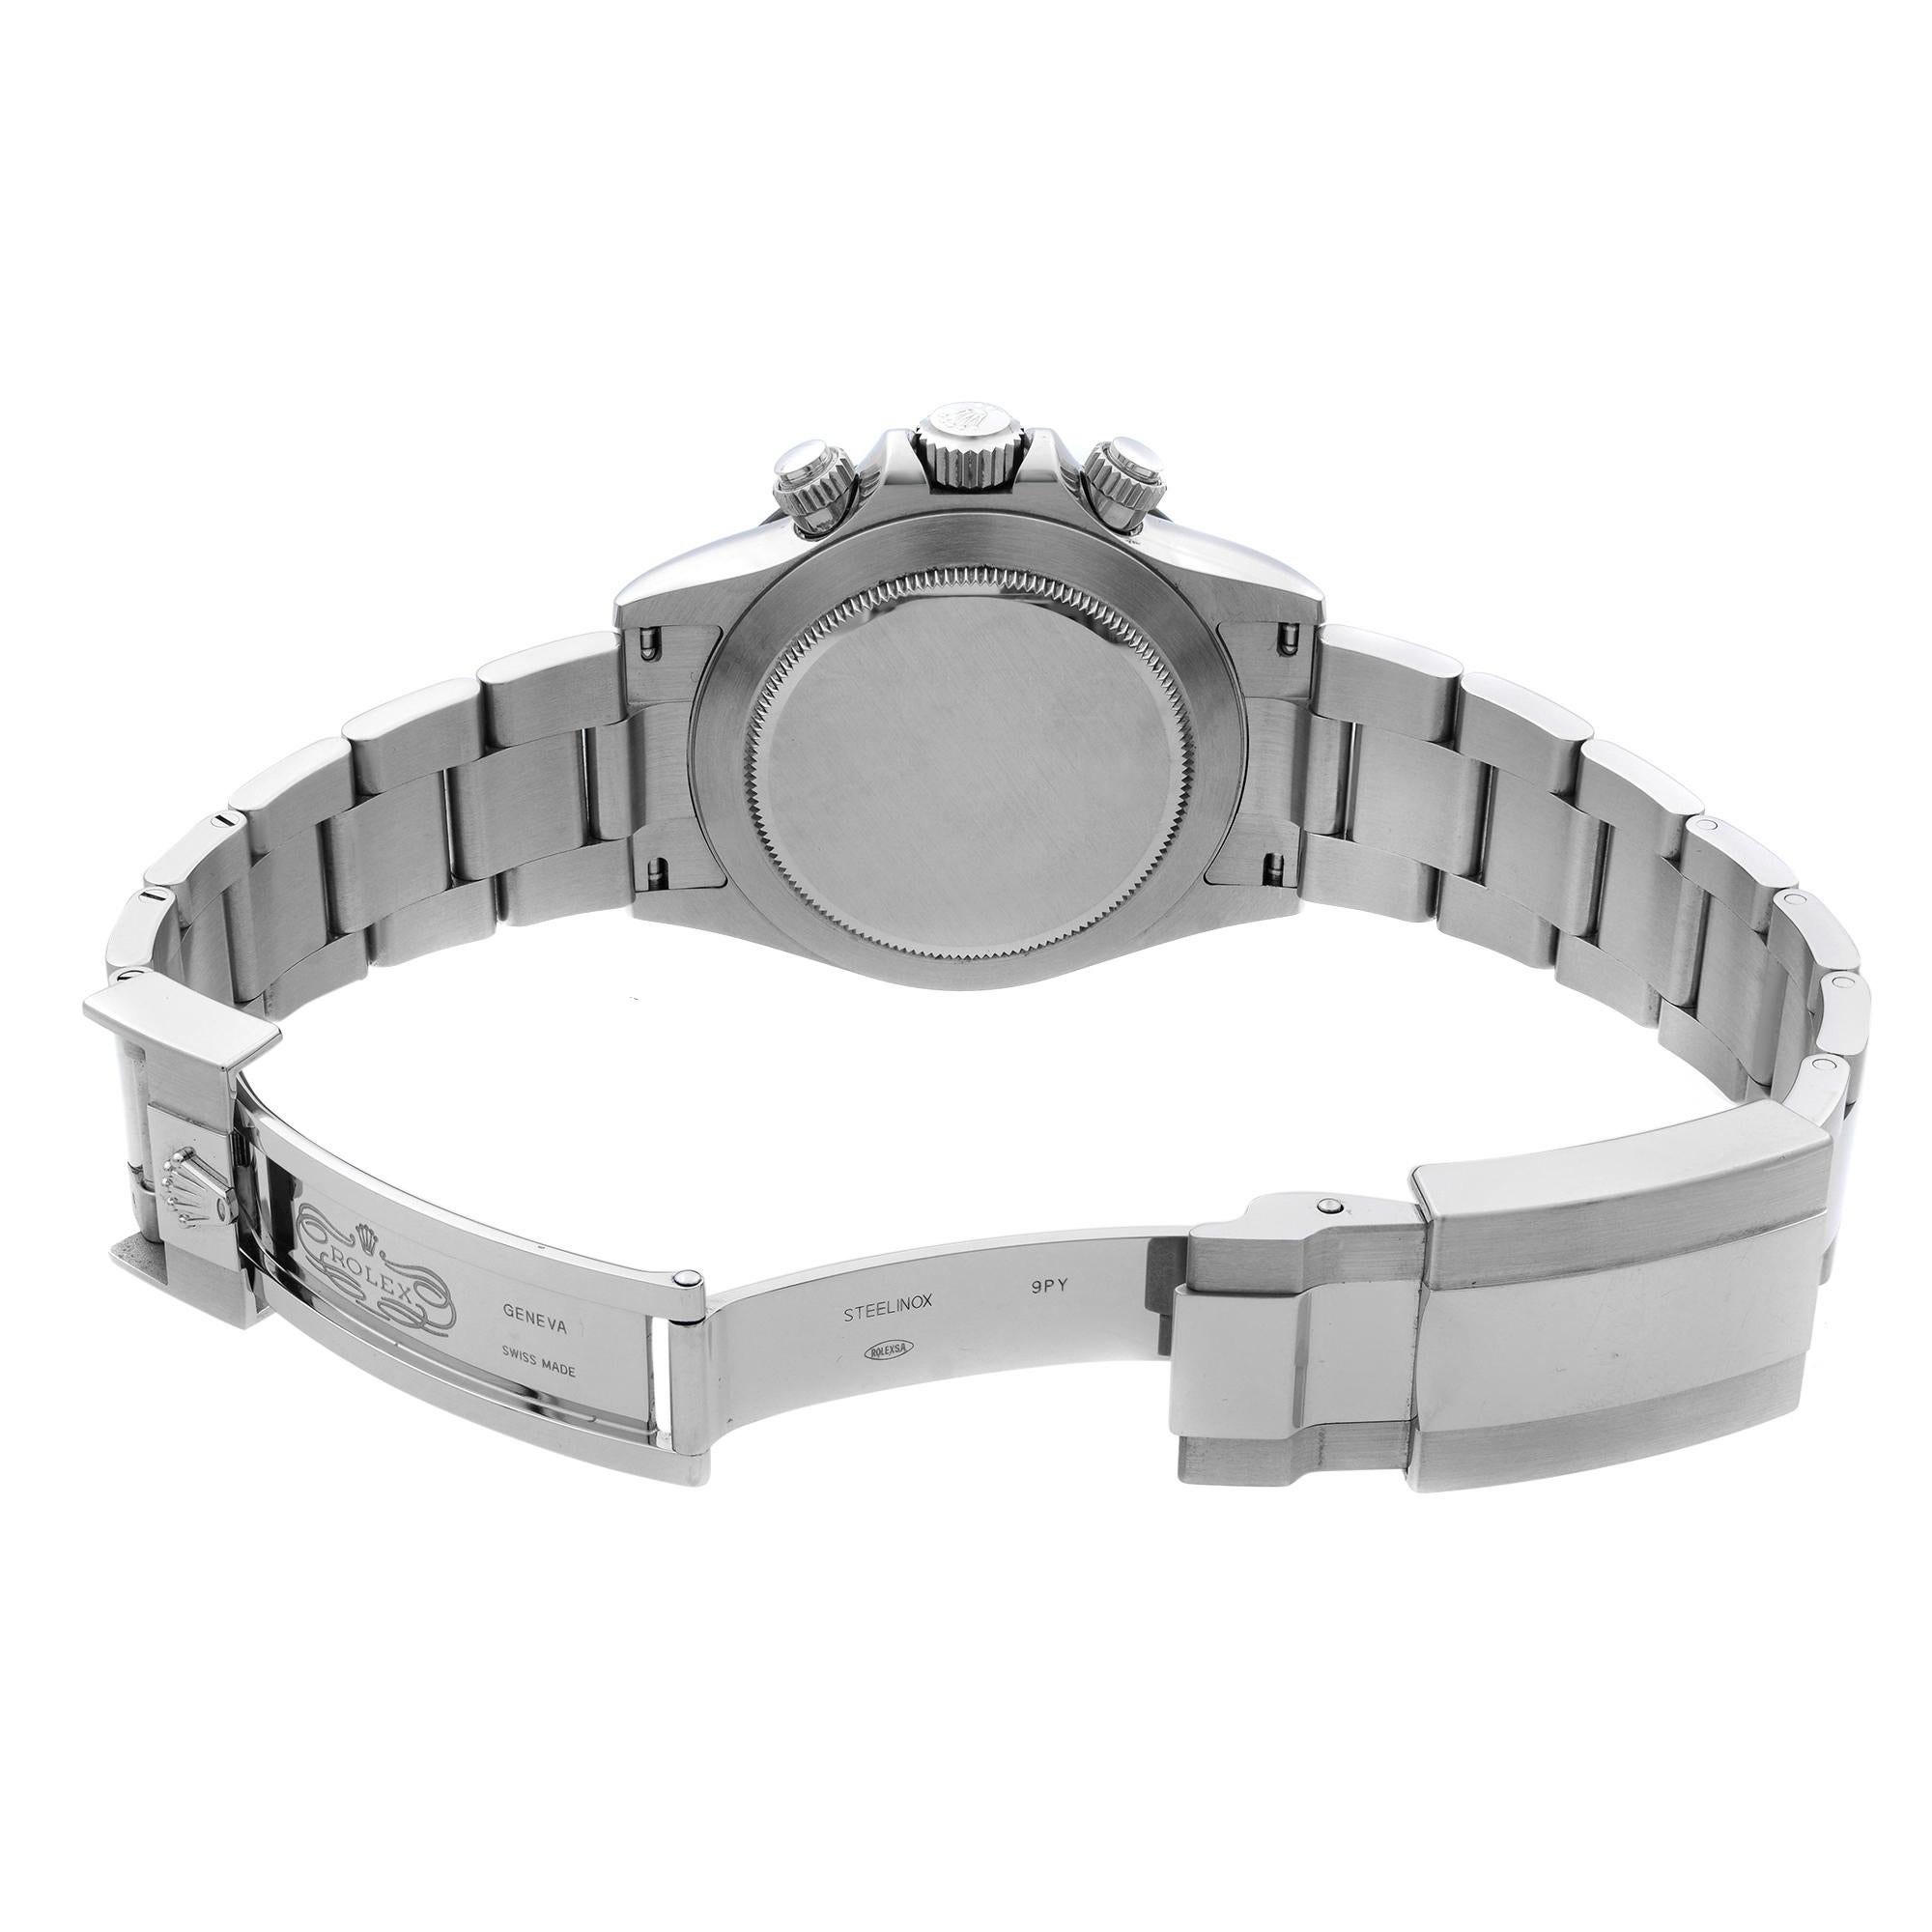 Rolex Cosmograph Daytona Steel Ceramic Bezel White Dial Automatic Watch 116500LN 1